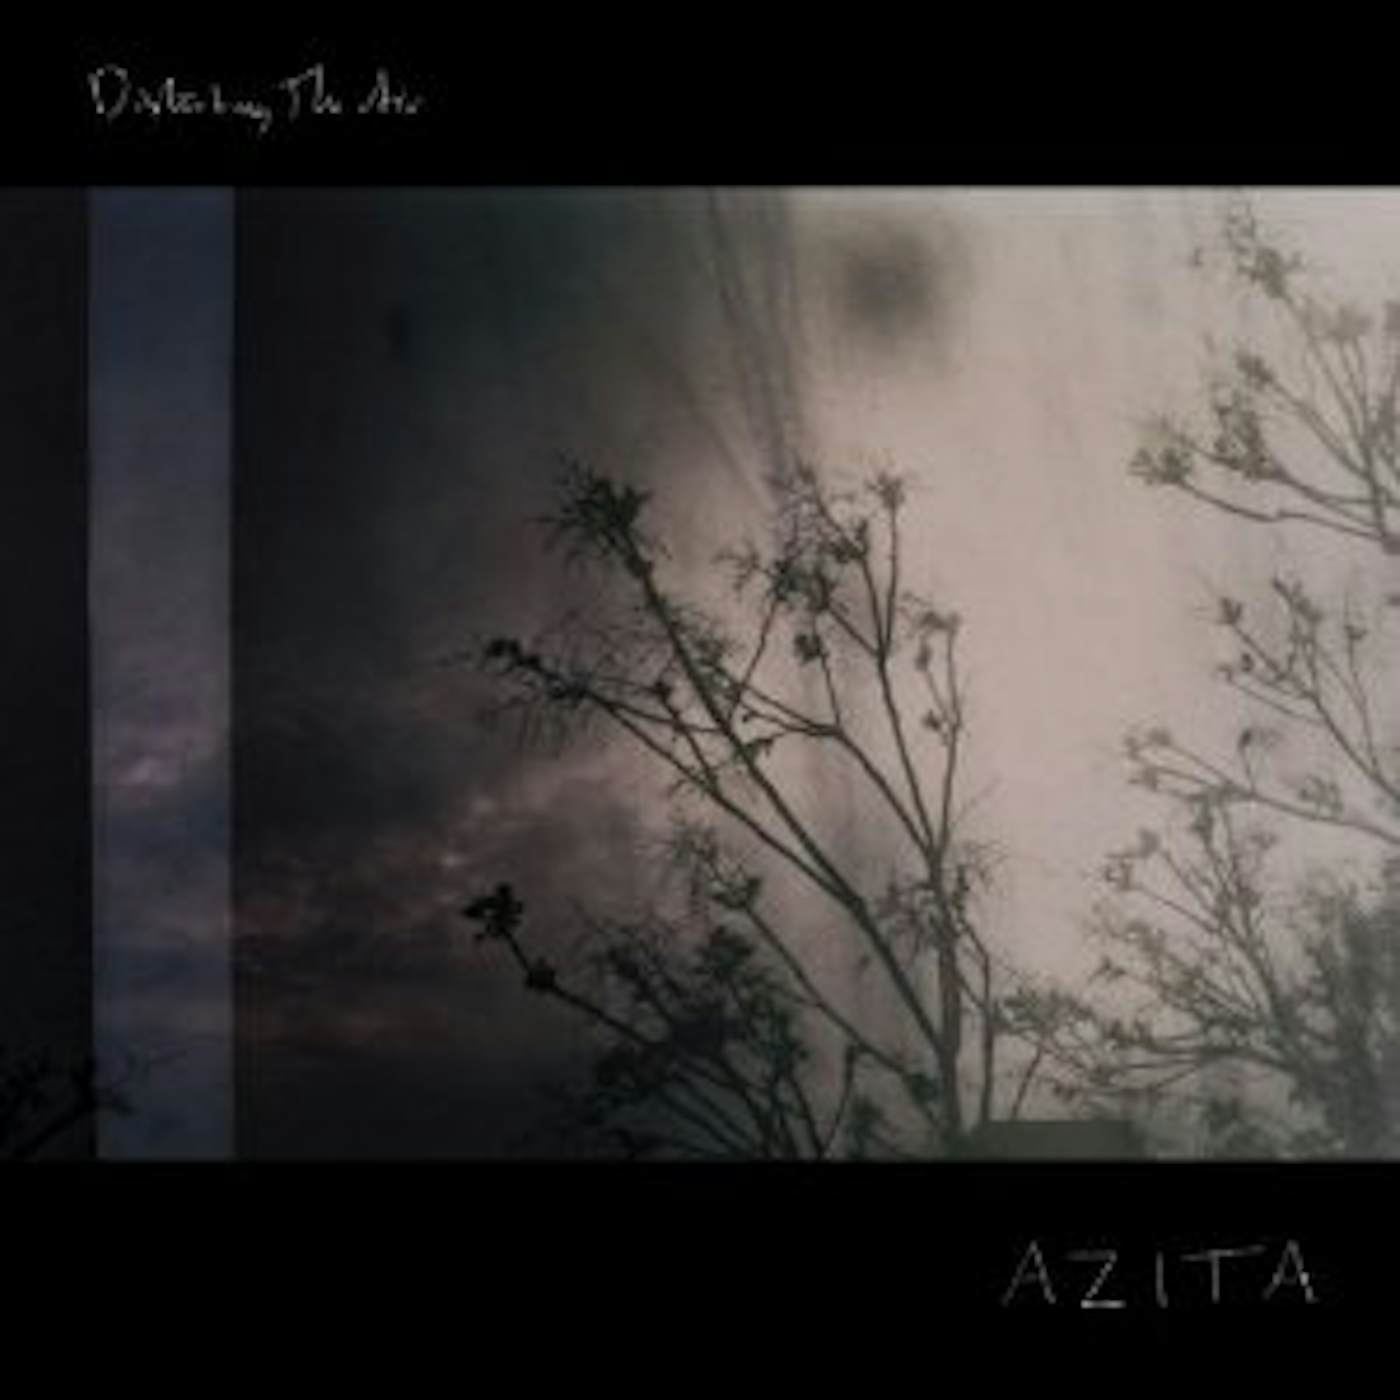 AZITA Disturbing The Air Vinyl Record